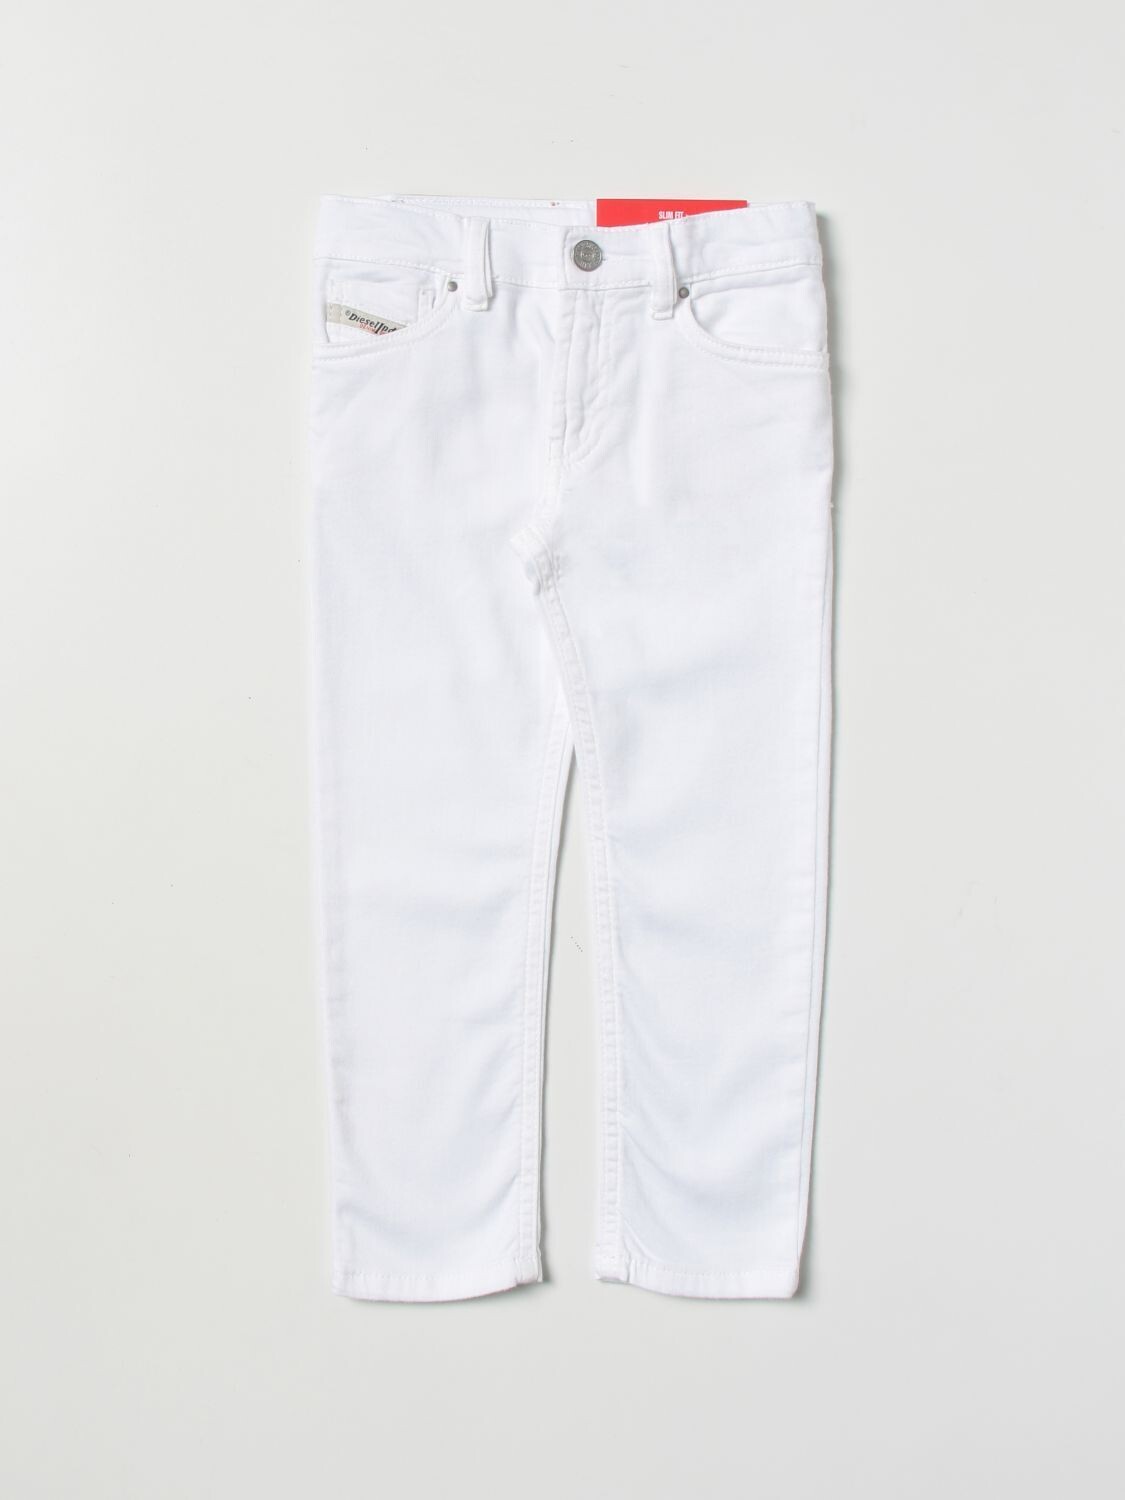 Diesel-jeans bianco, size: 4 anni